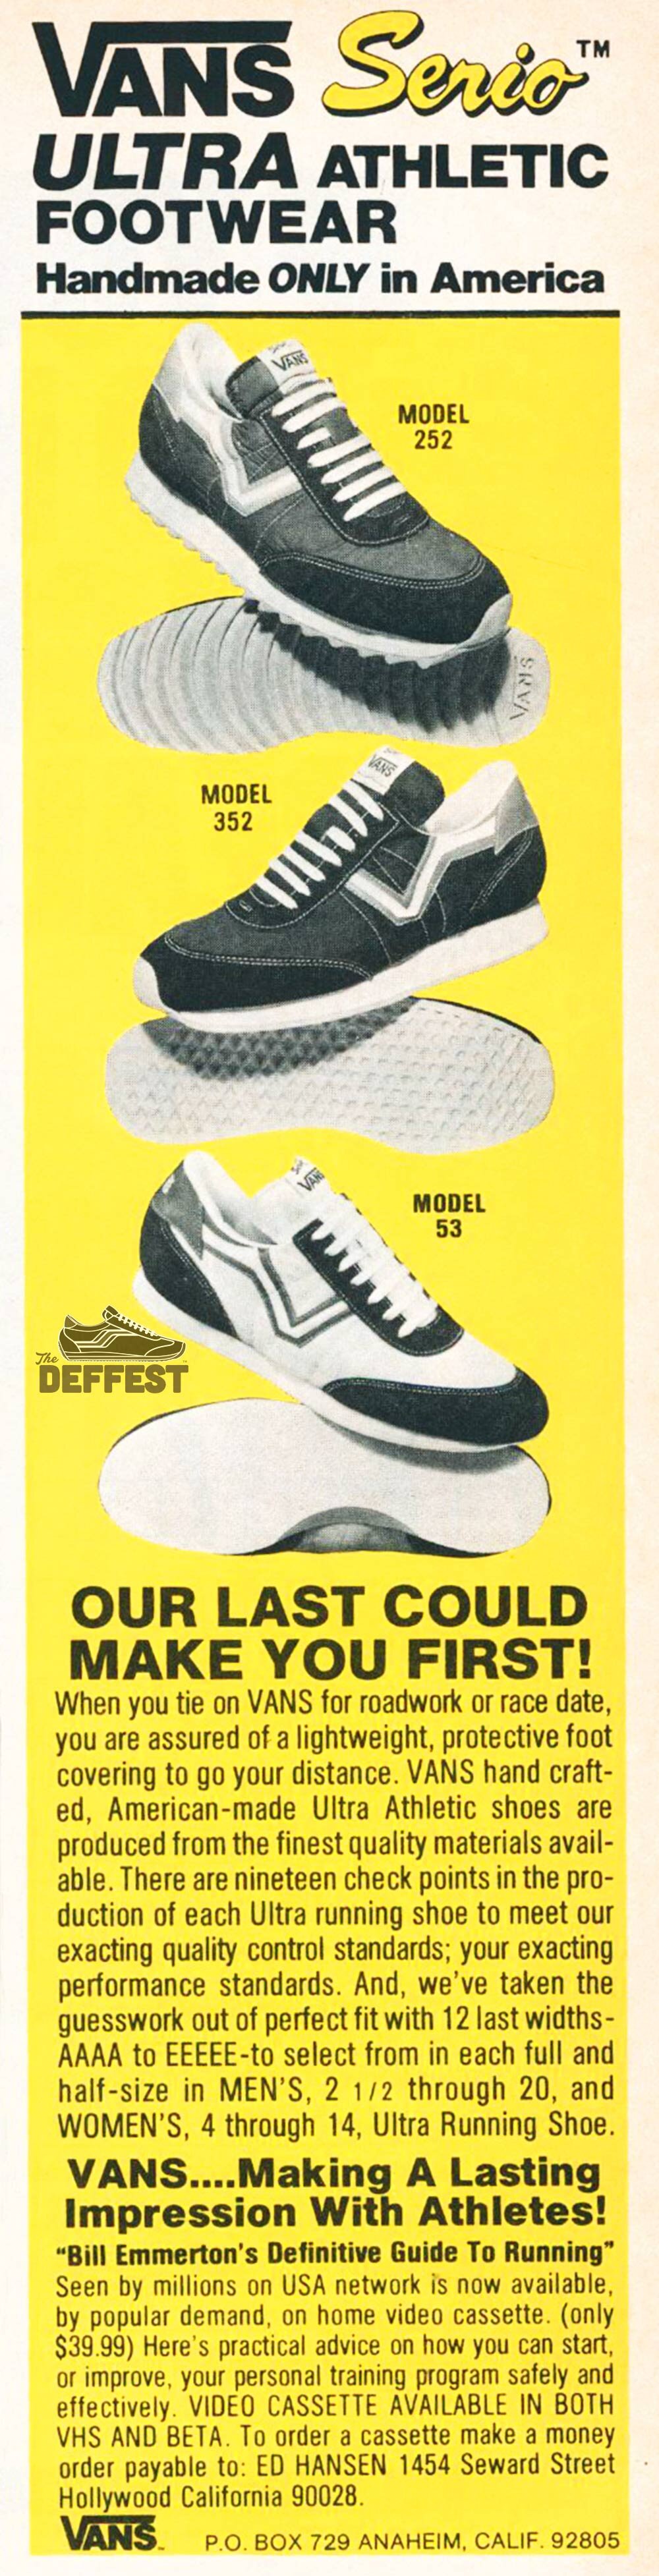 Jeff Spicoli — The Deffest®. A vintage and retro sneaker blog ...